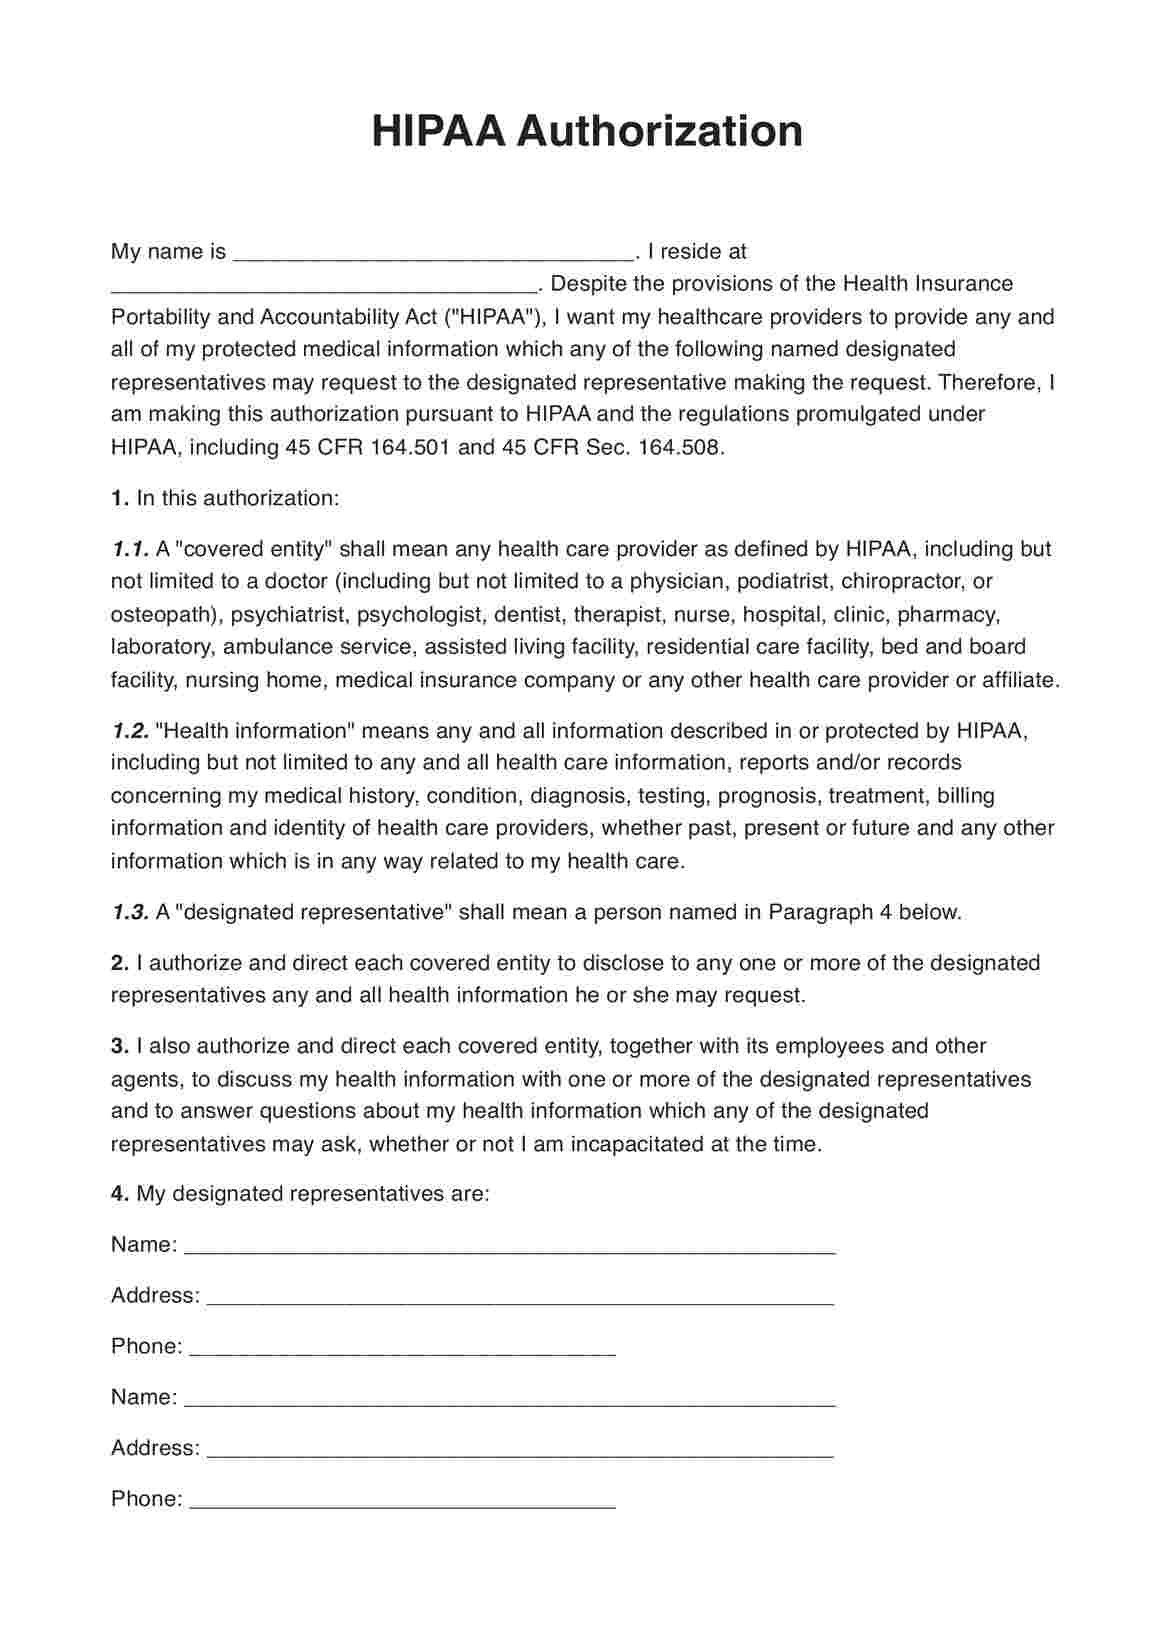 HIPAA Release Form Texas PDF Example